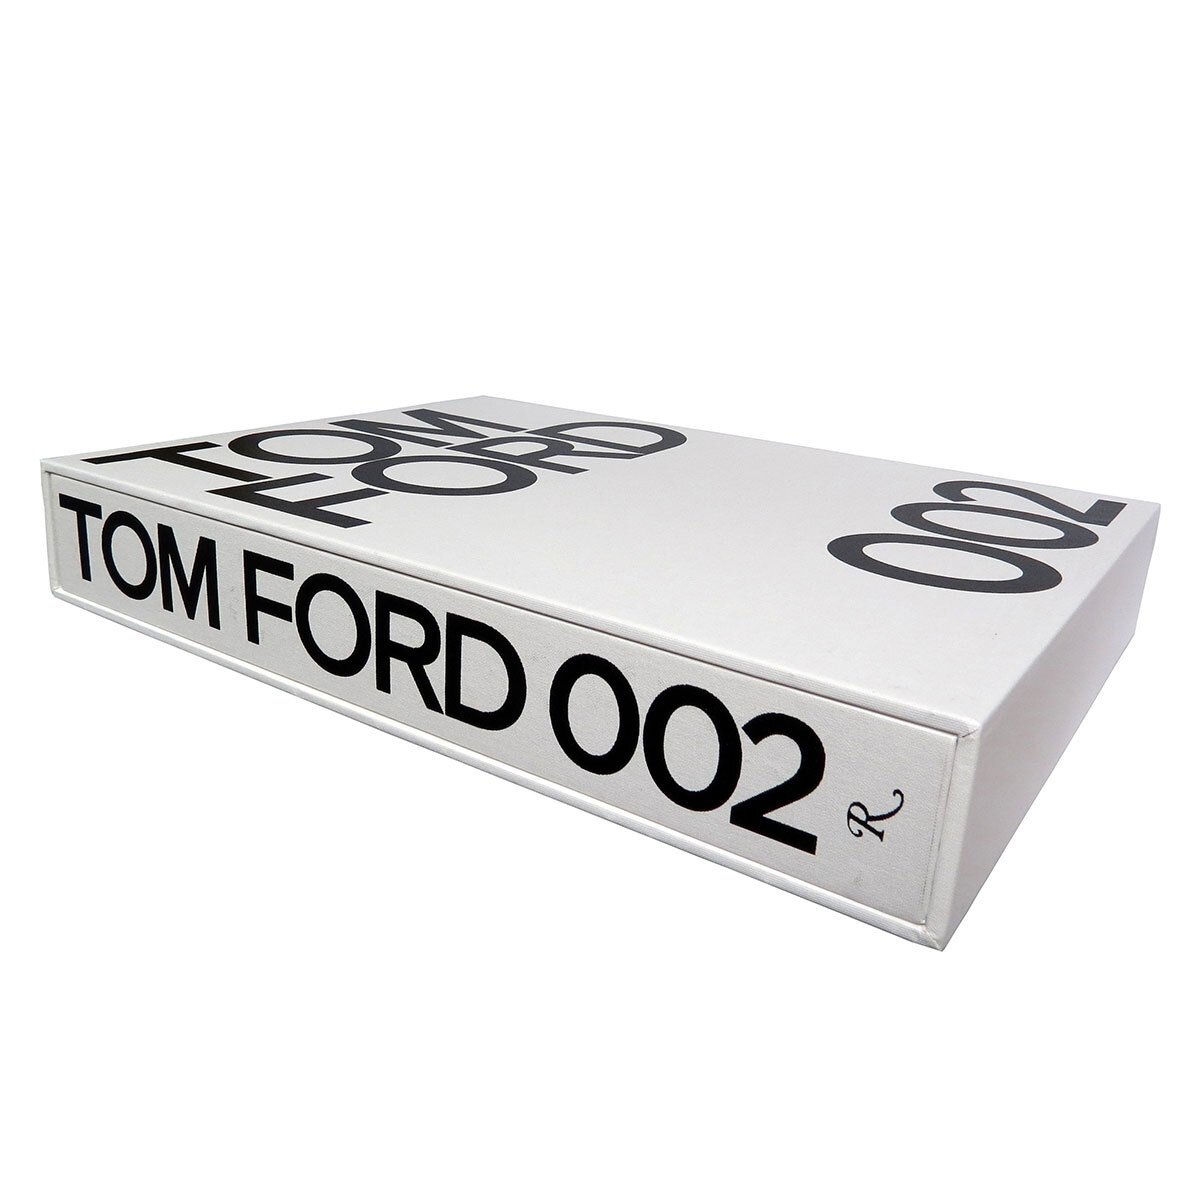 Tom Ford 002 | Costco UK